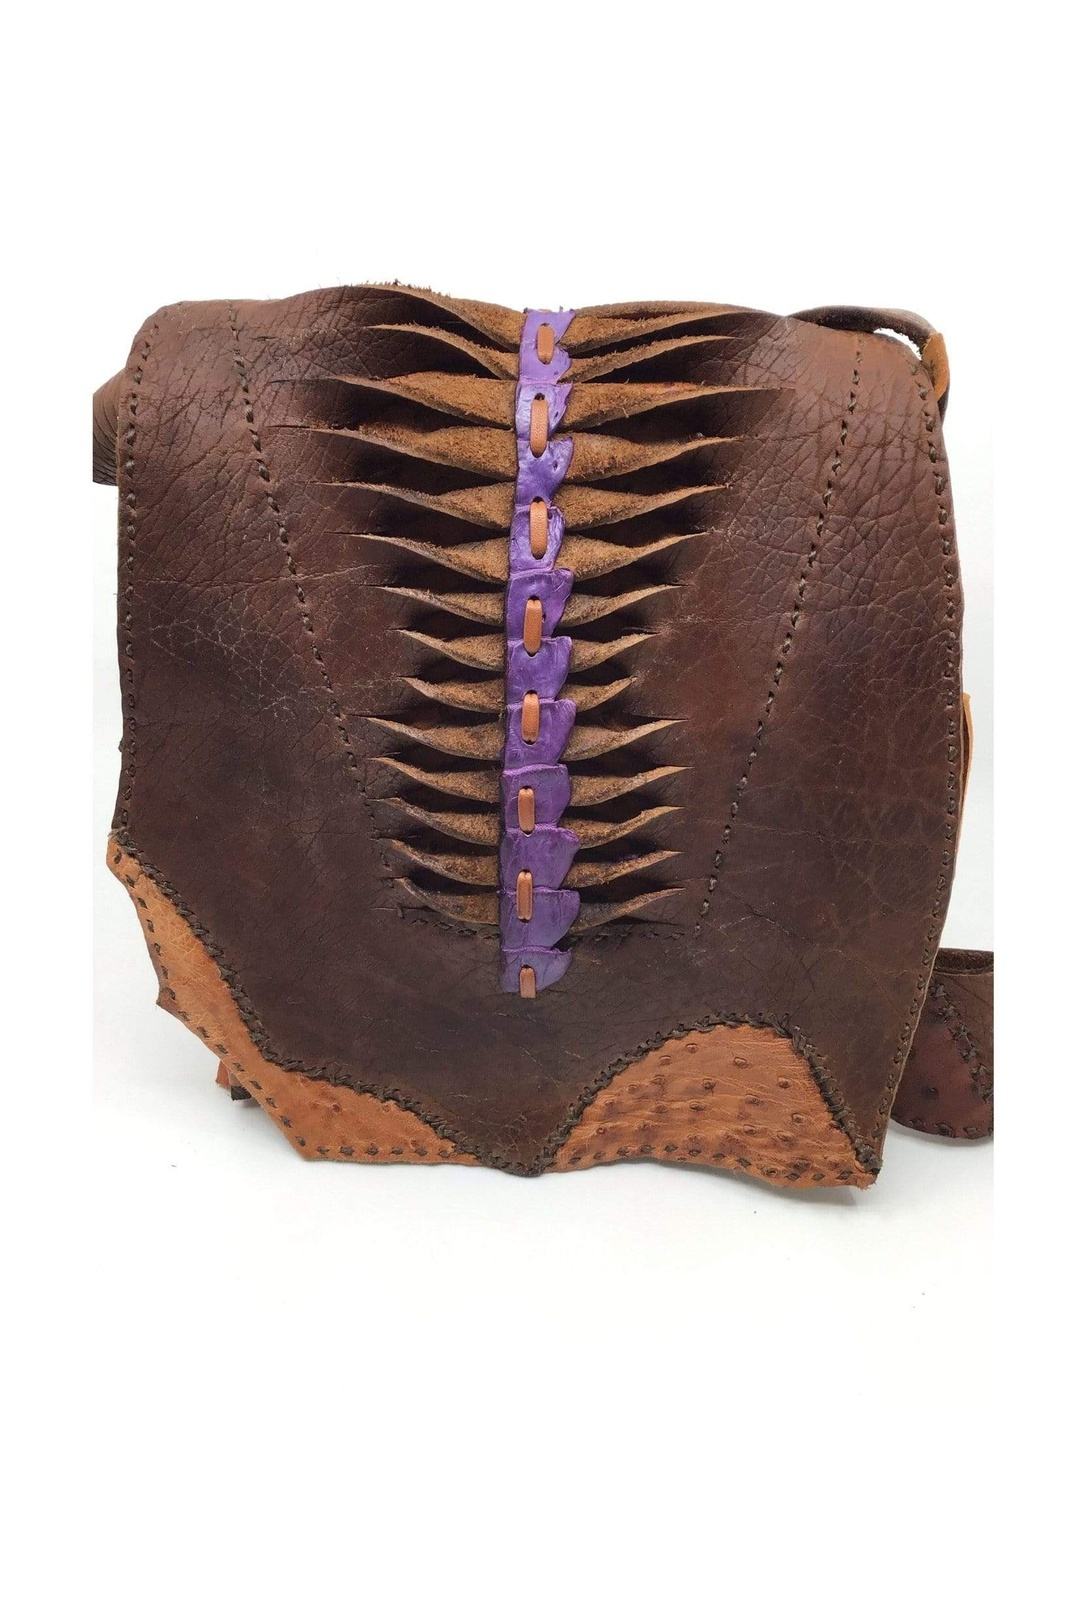 Buffalo Bag with purple detail